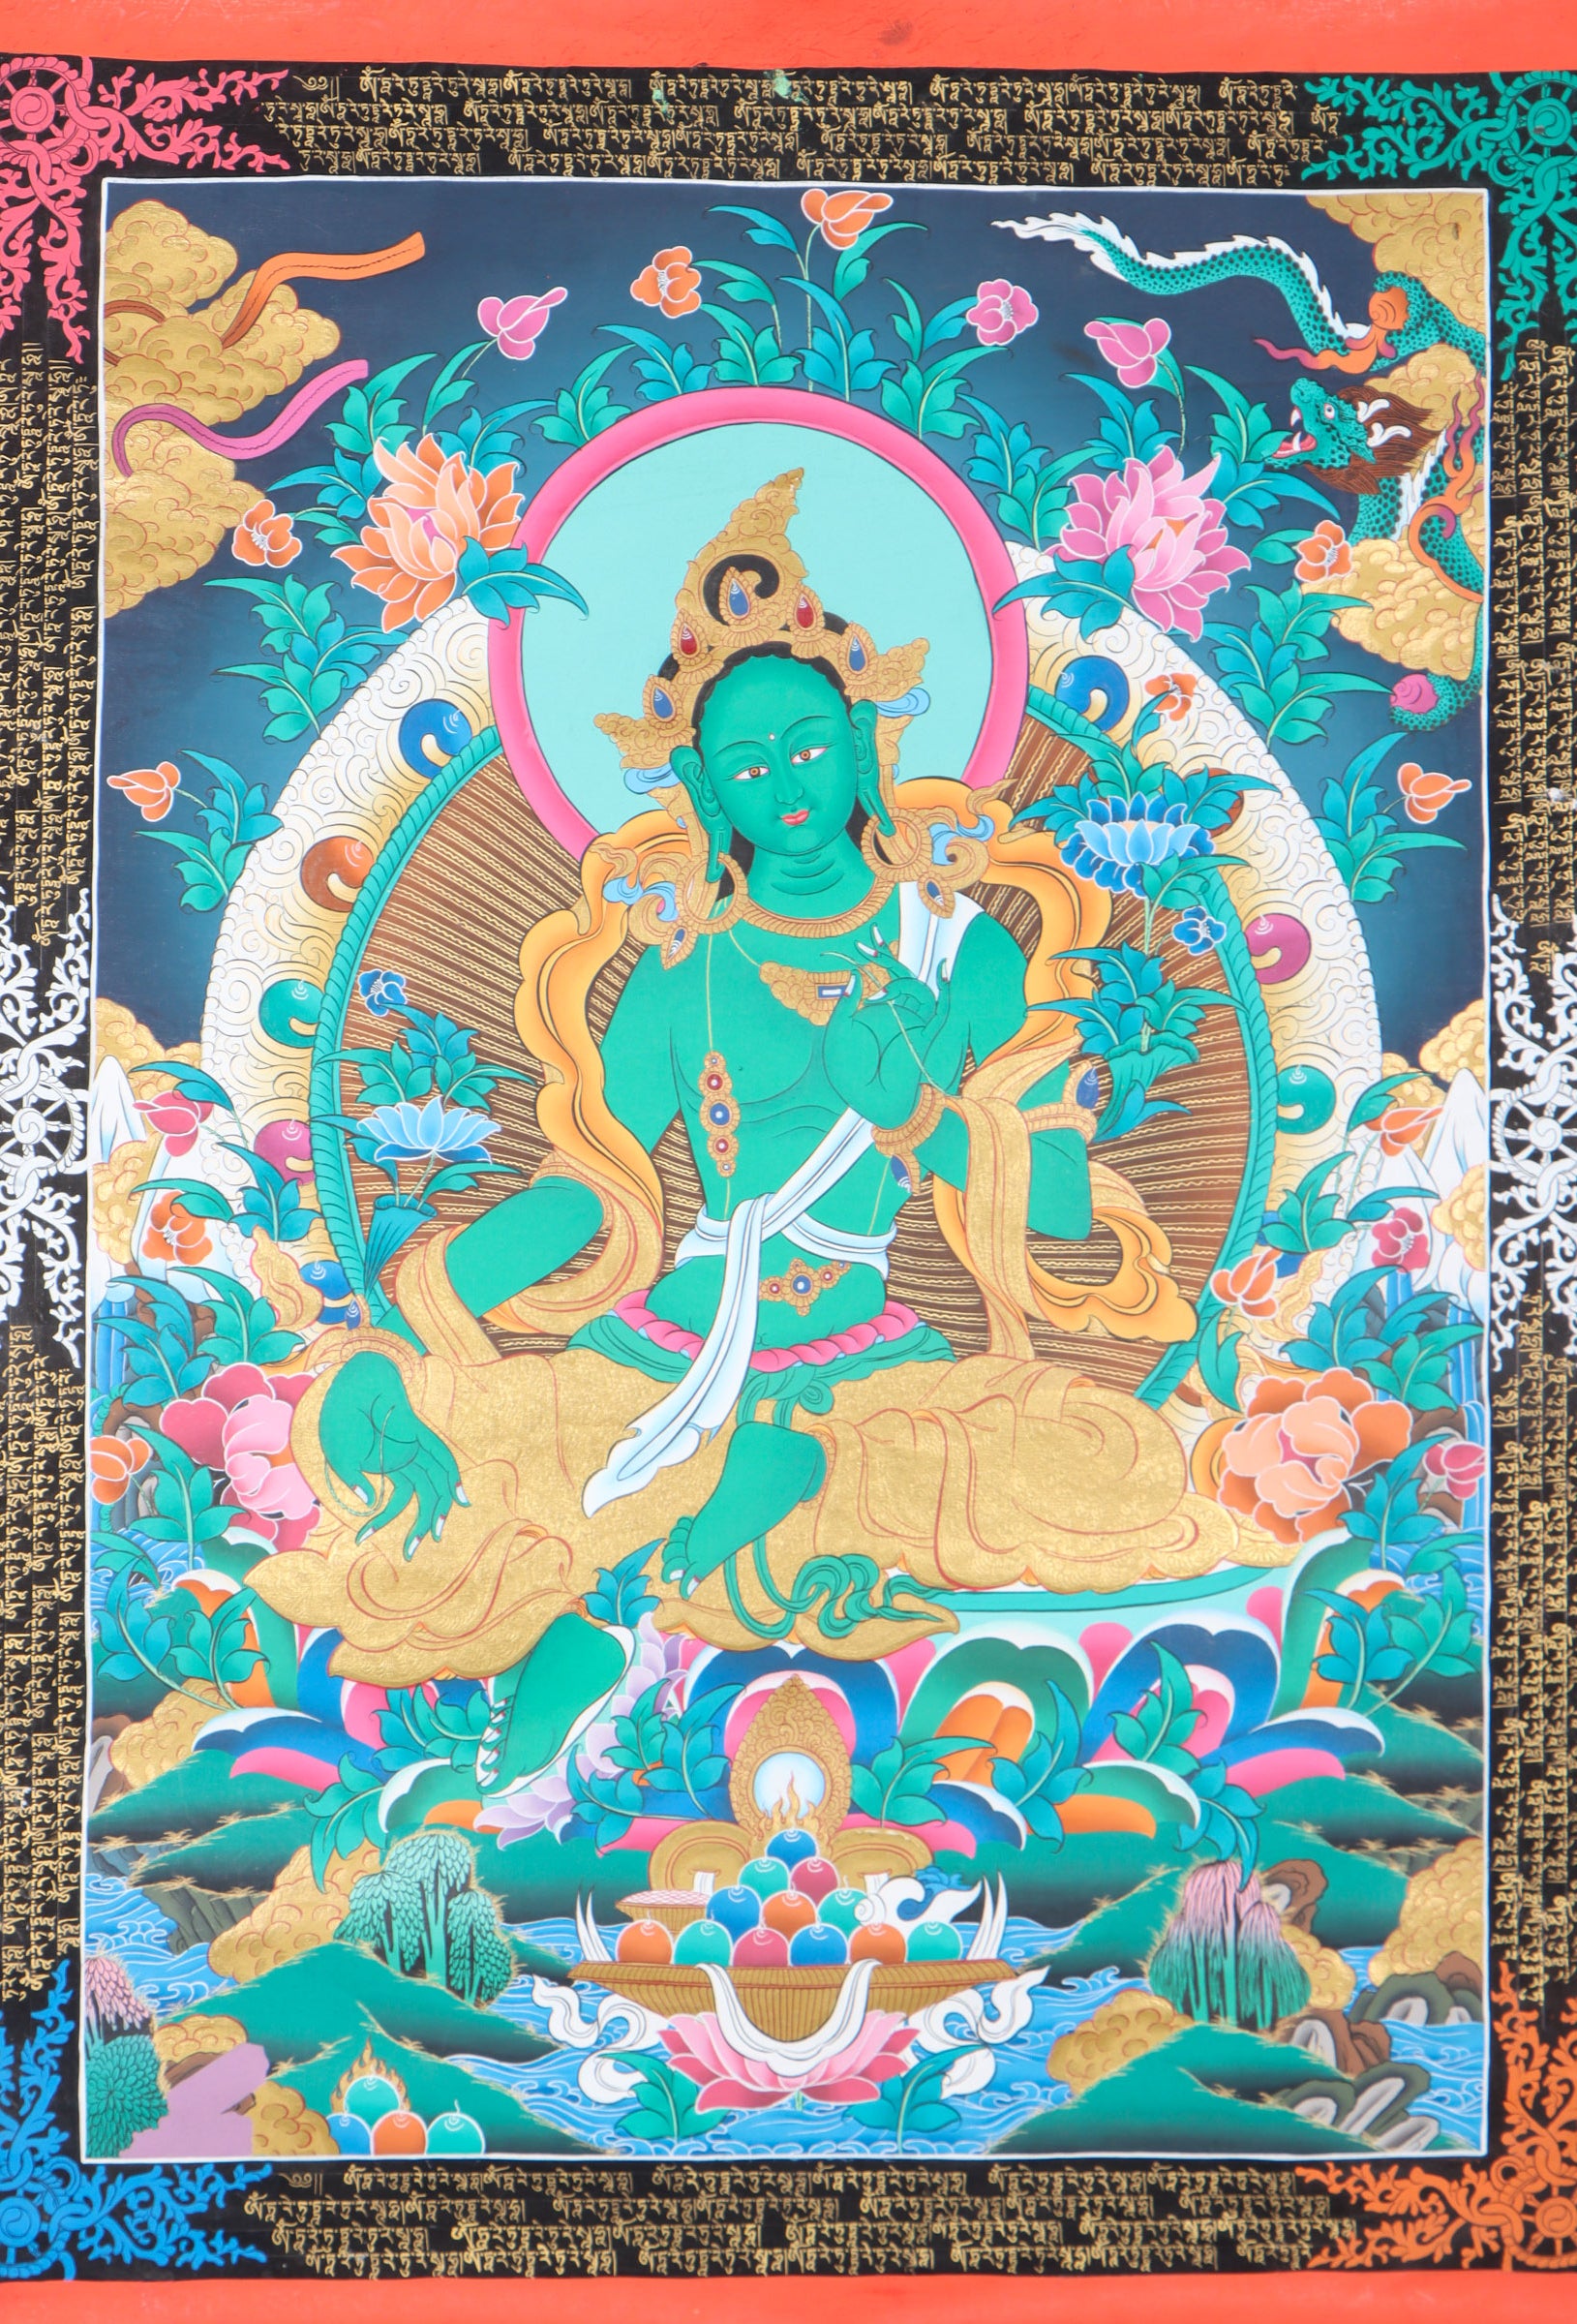 Green Tara Thangka for spiritual protection and guidance.